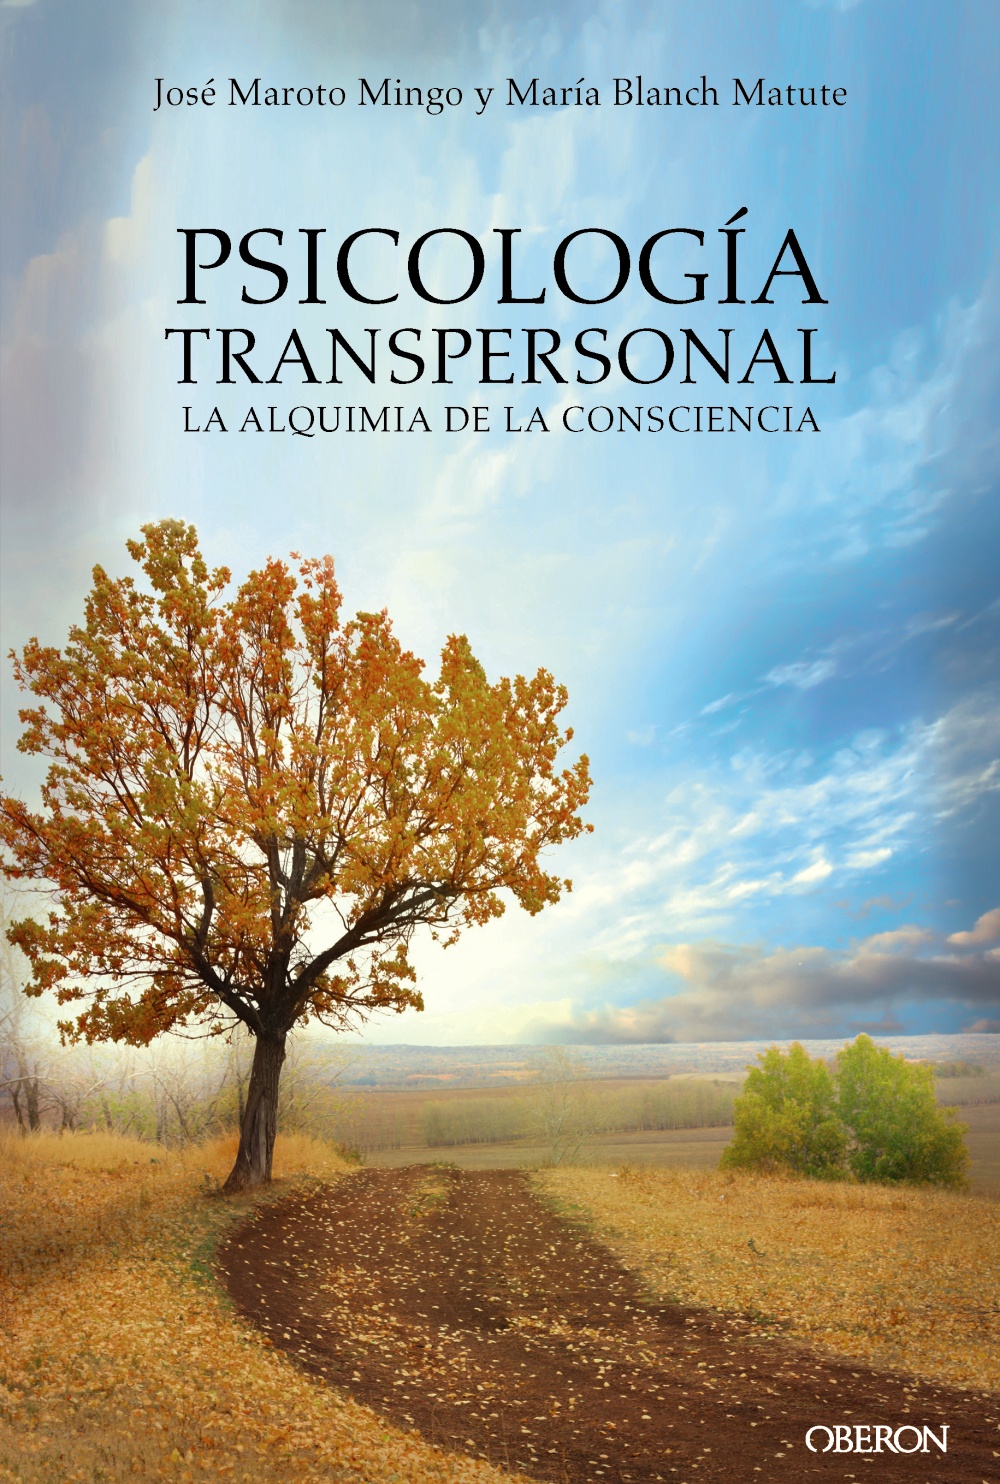 psicologia-transpersonal-la-alquimia-de-la-consciencia-978-84-415-3916-7.jpg